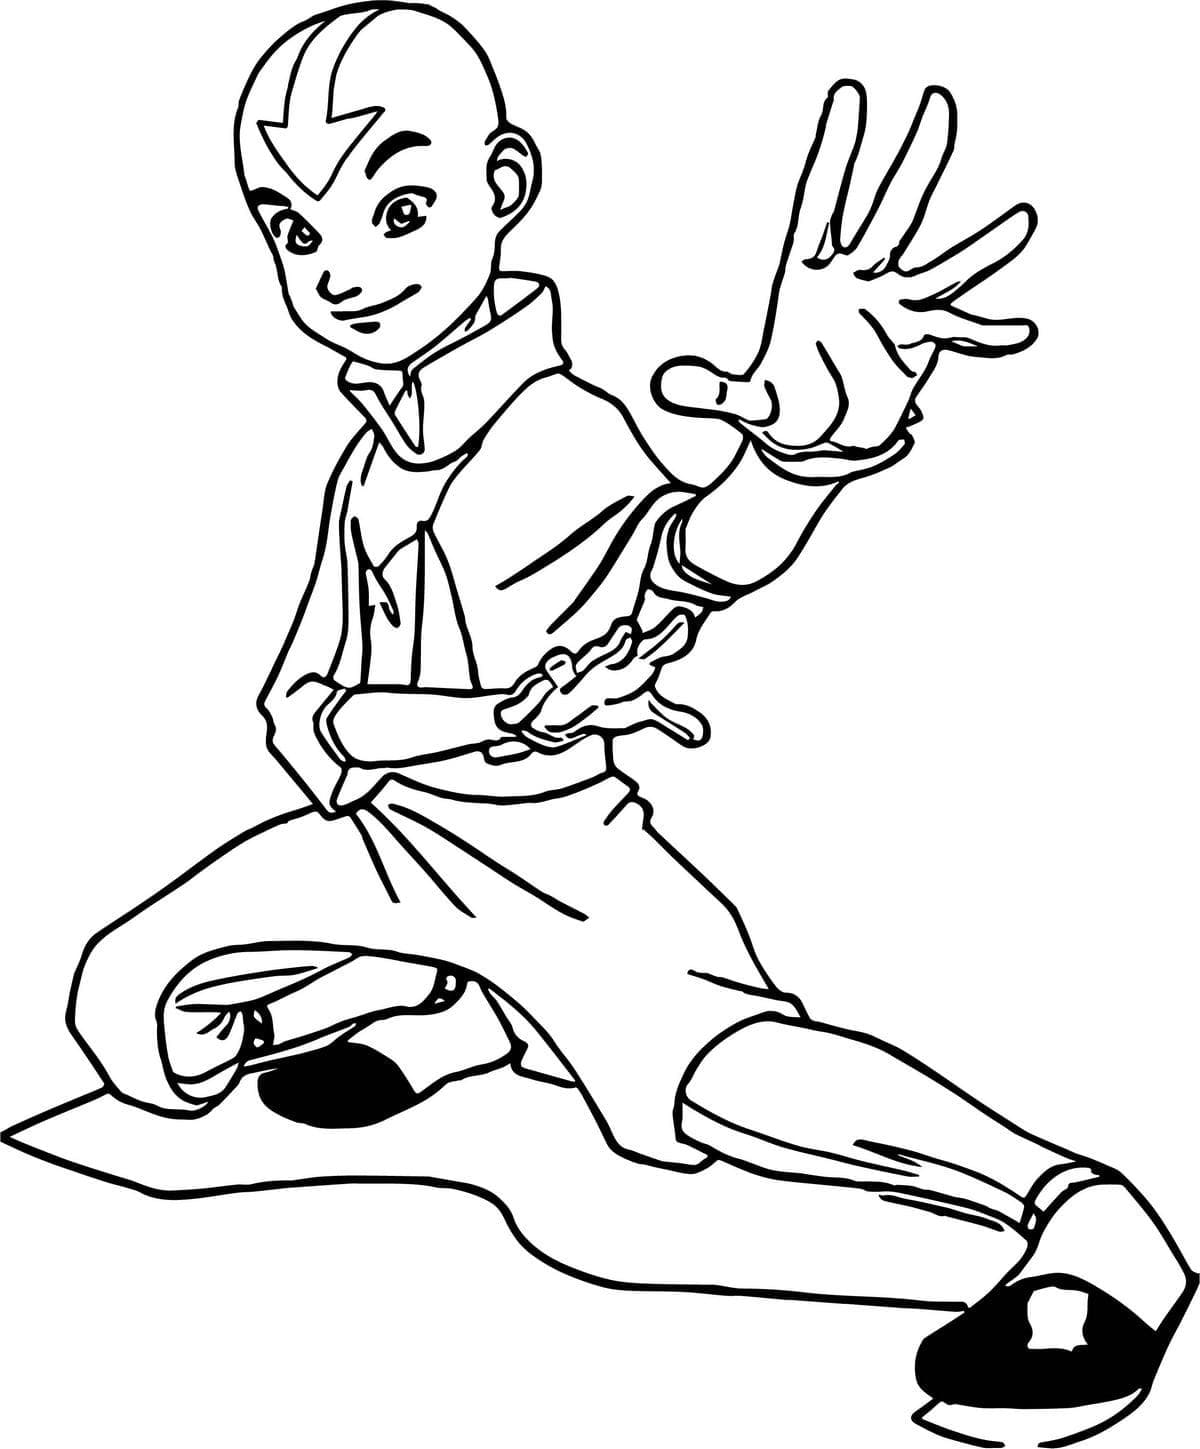 Aang s’entraîne coloring page